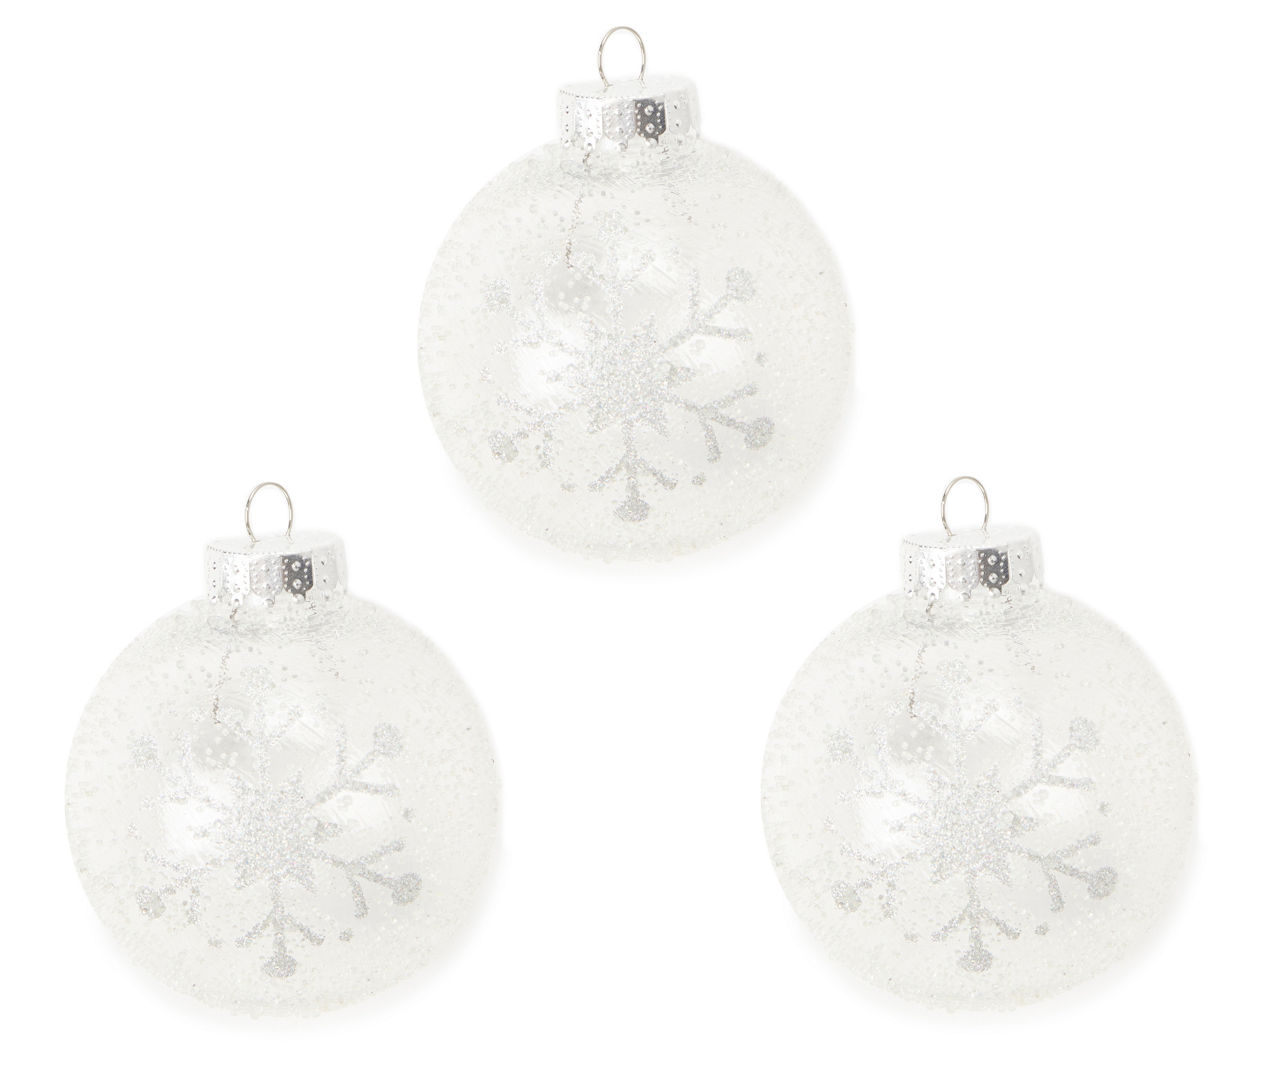 Small Snowflake Ornaments - Set/6